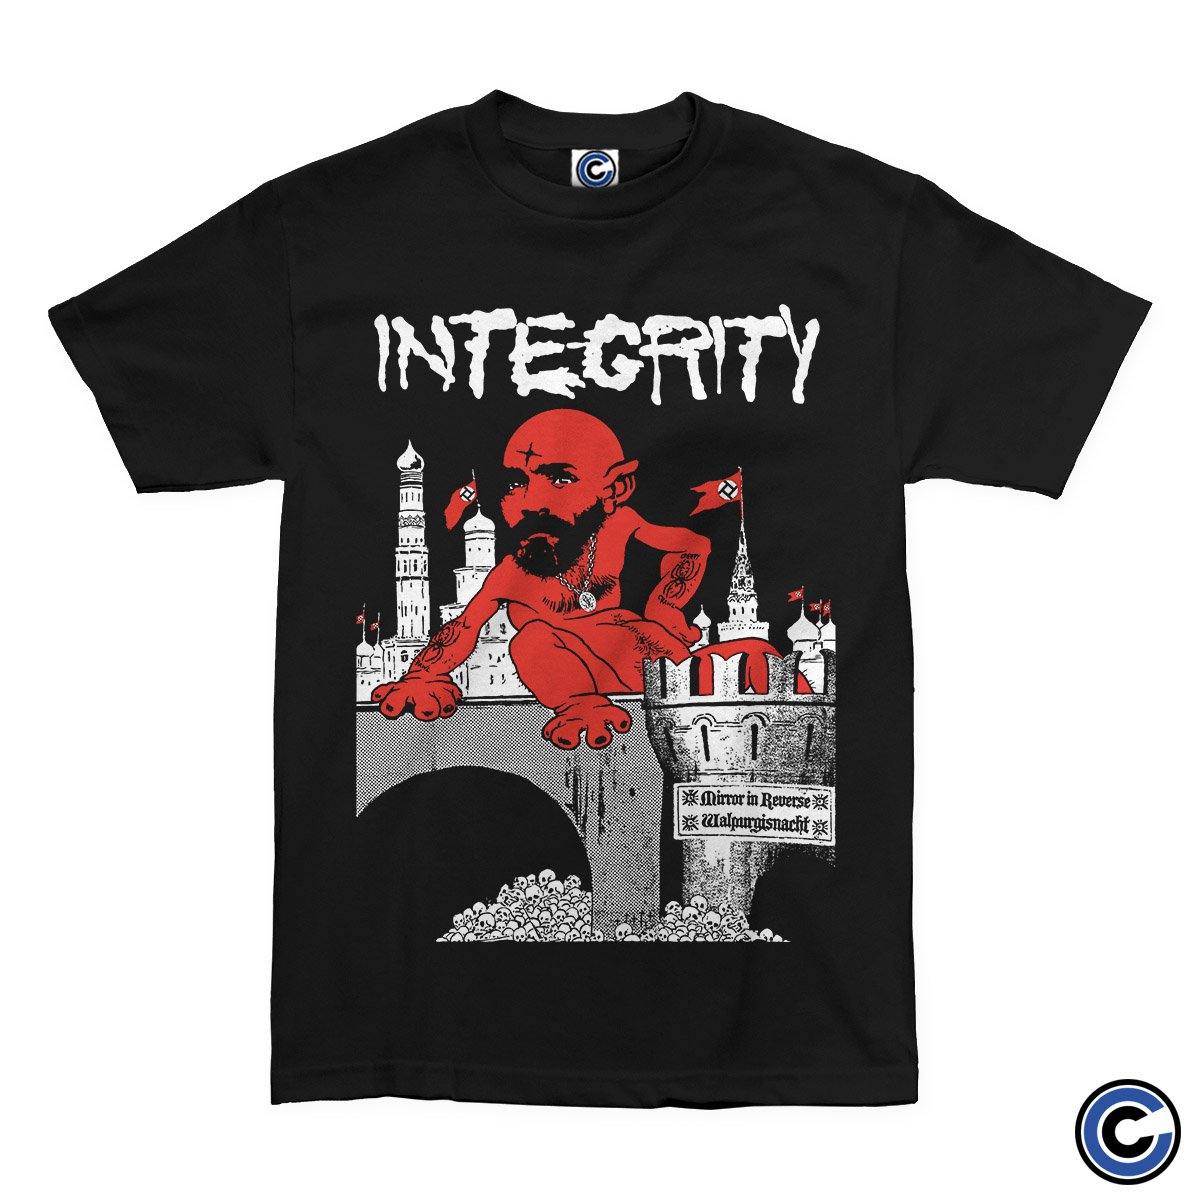 Buy – Integrity "Reverse" Shirt – Band & Music Merch – Cold Cuts Merch